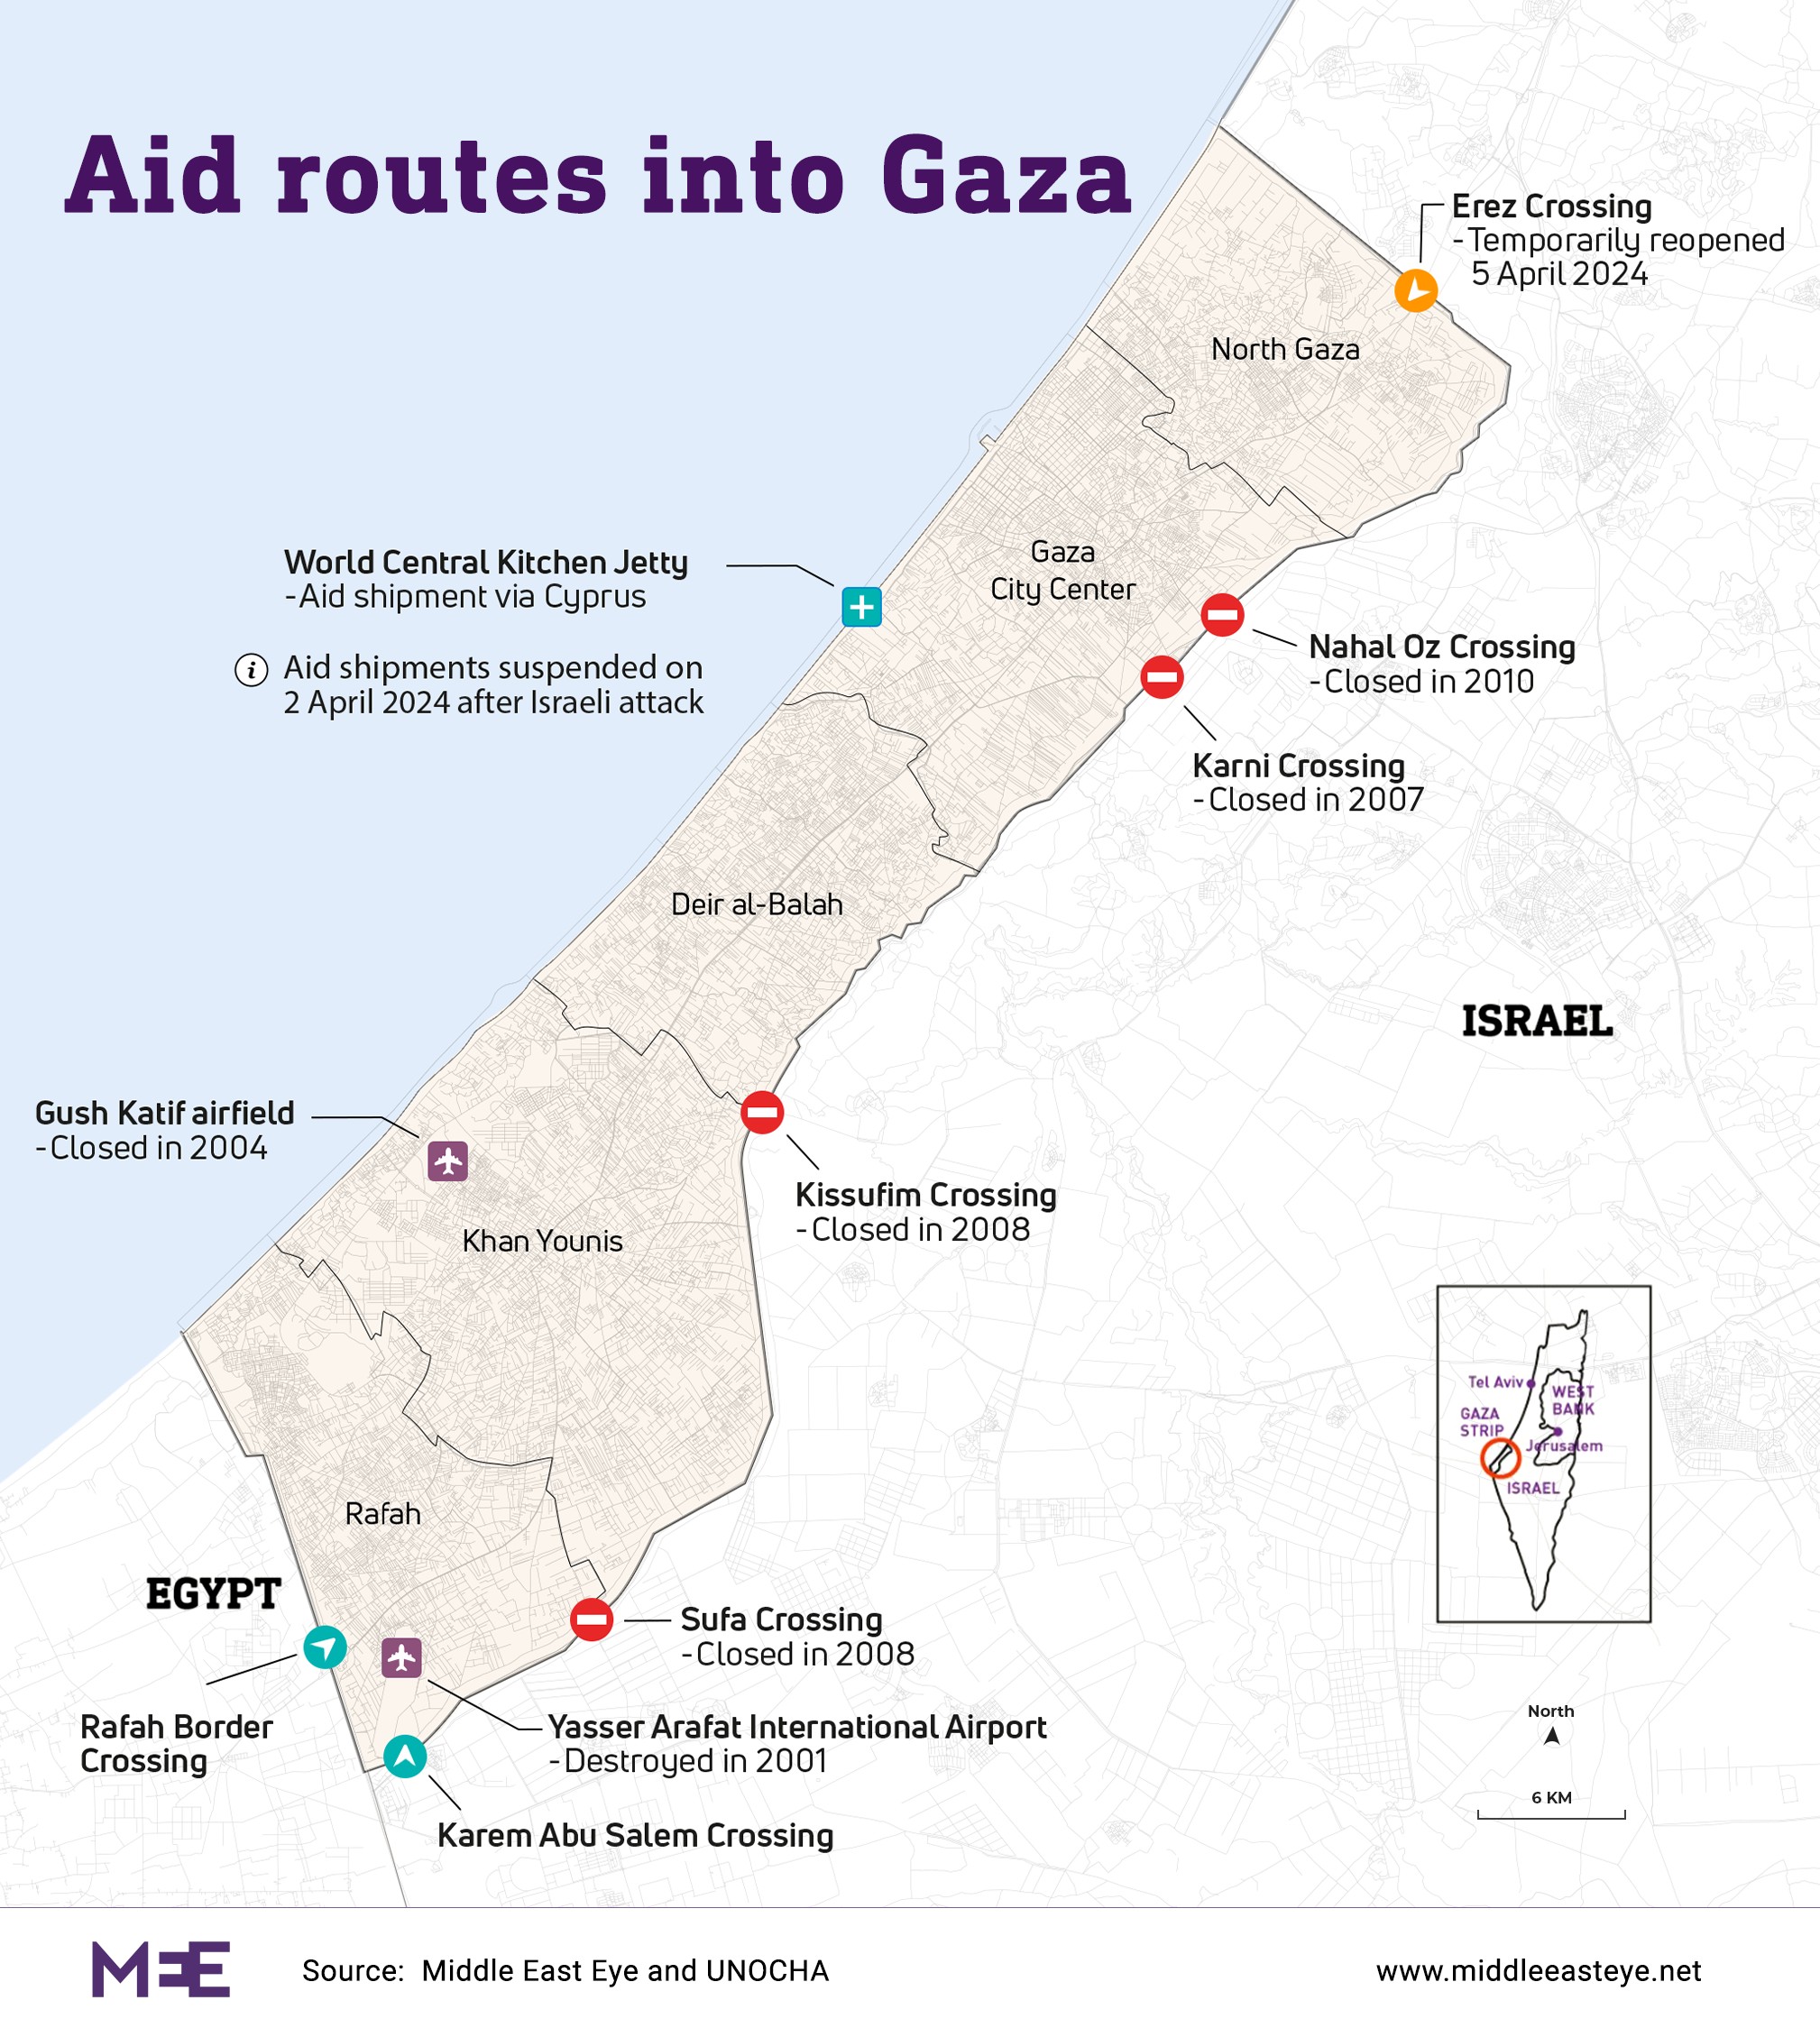 Aid routes into Gaza